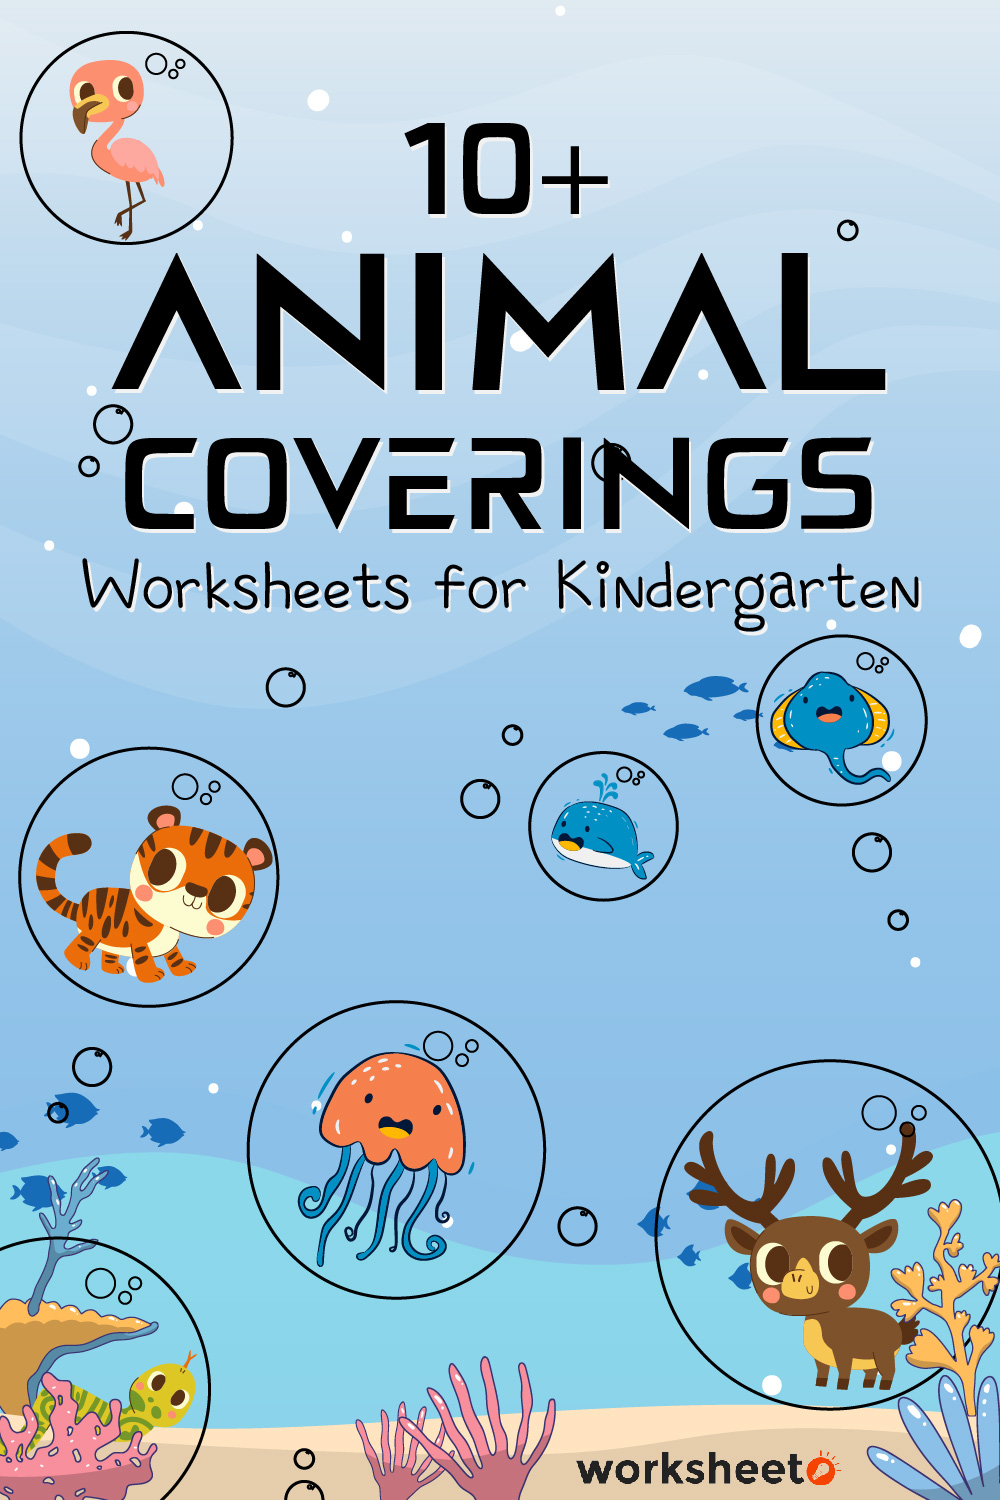 6 Images of Animal Coverings Worksheets For Kindergarten